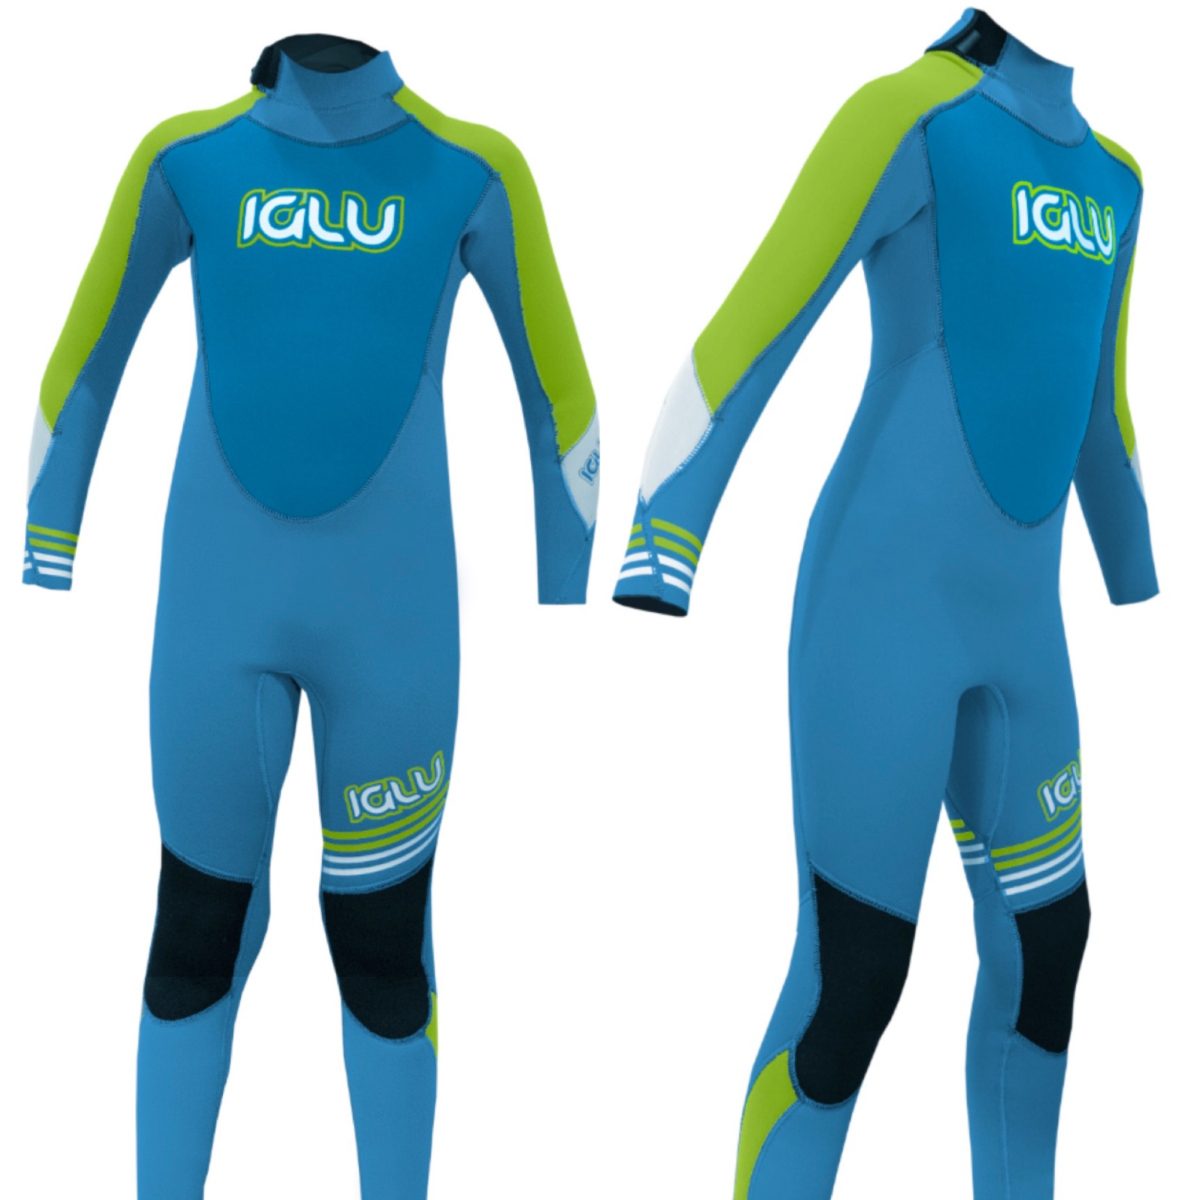 IGLU 4/3 Kids wetsuit Full length Winter Wetsuit Green Piran Surf